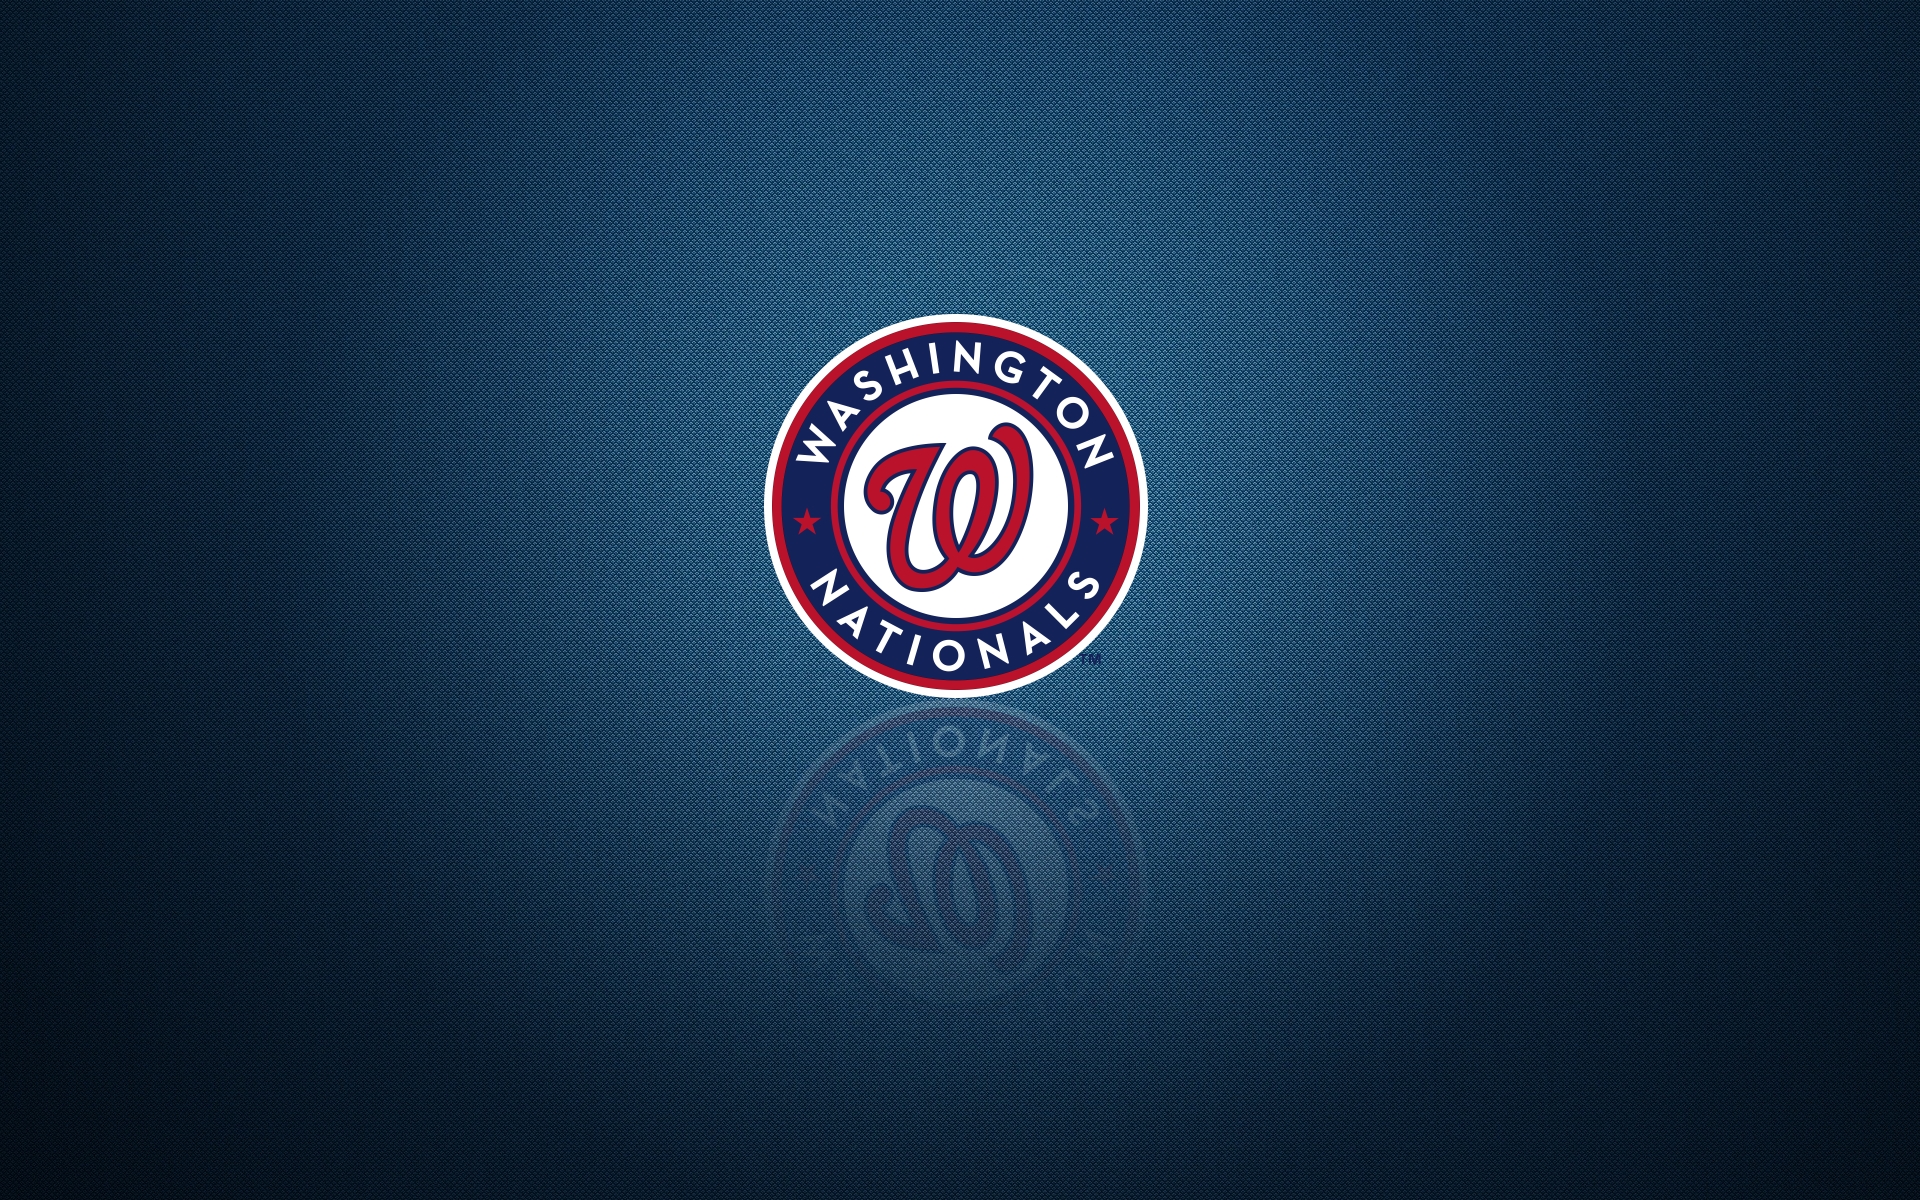 Washington Nationals \u2013 Logos Download